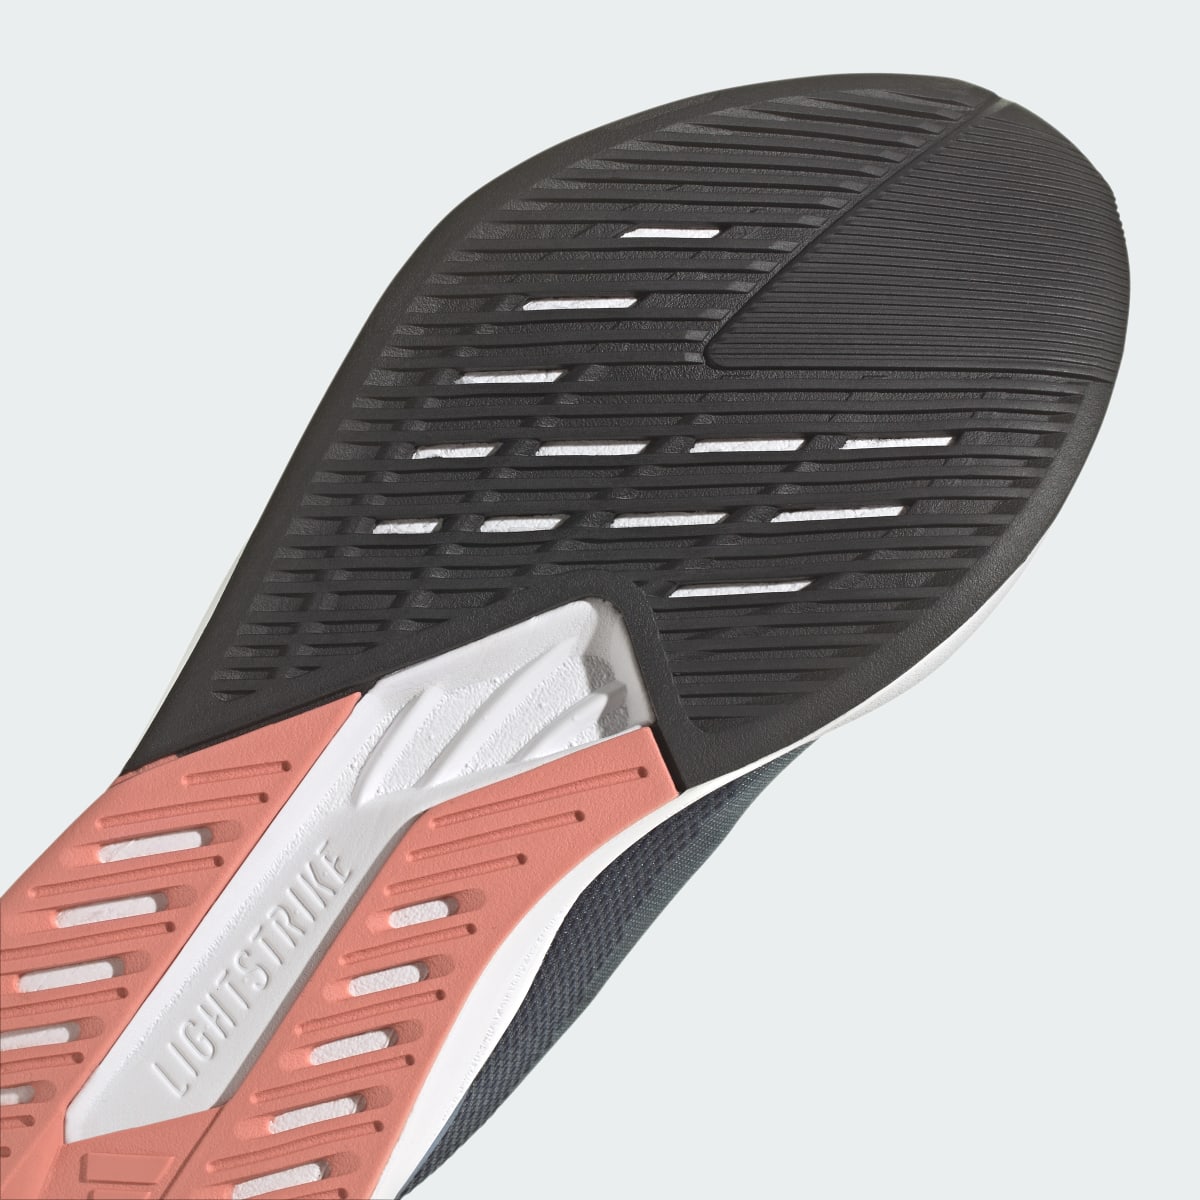 Adidas Duramo Speed Running Shoes. 10